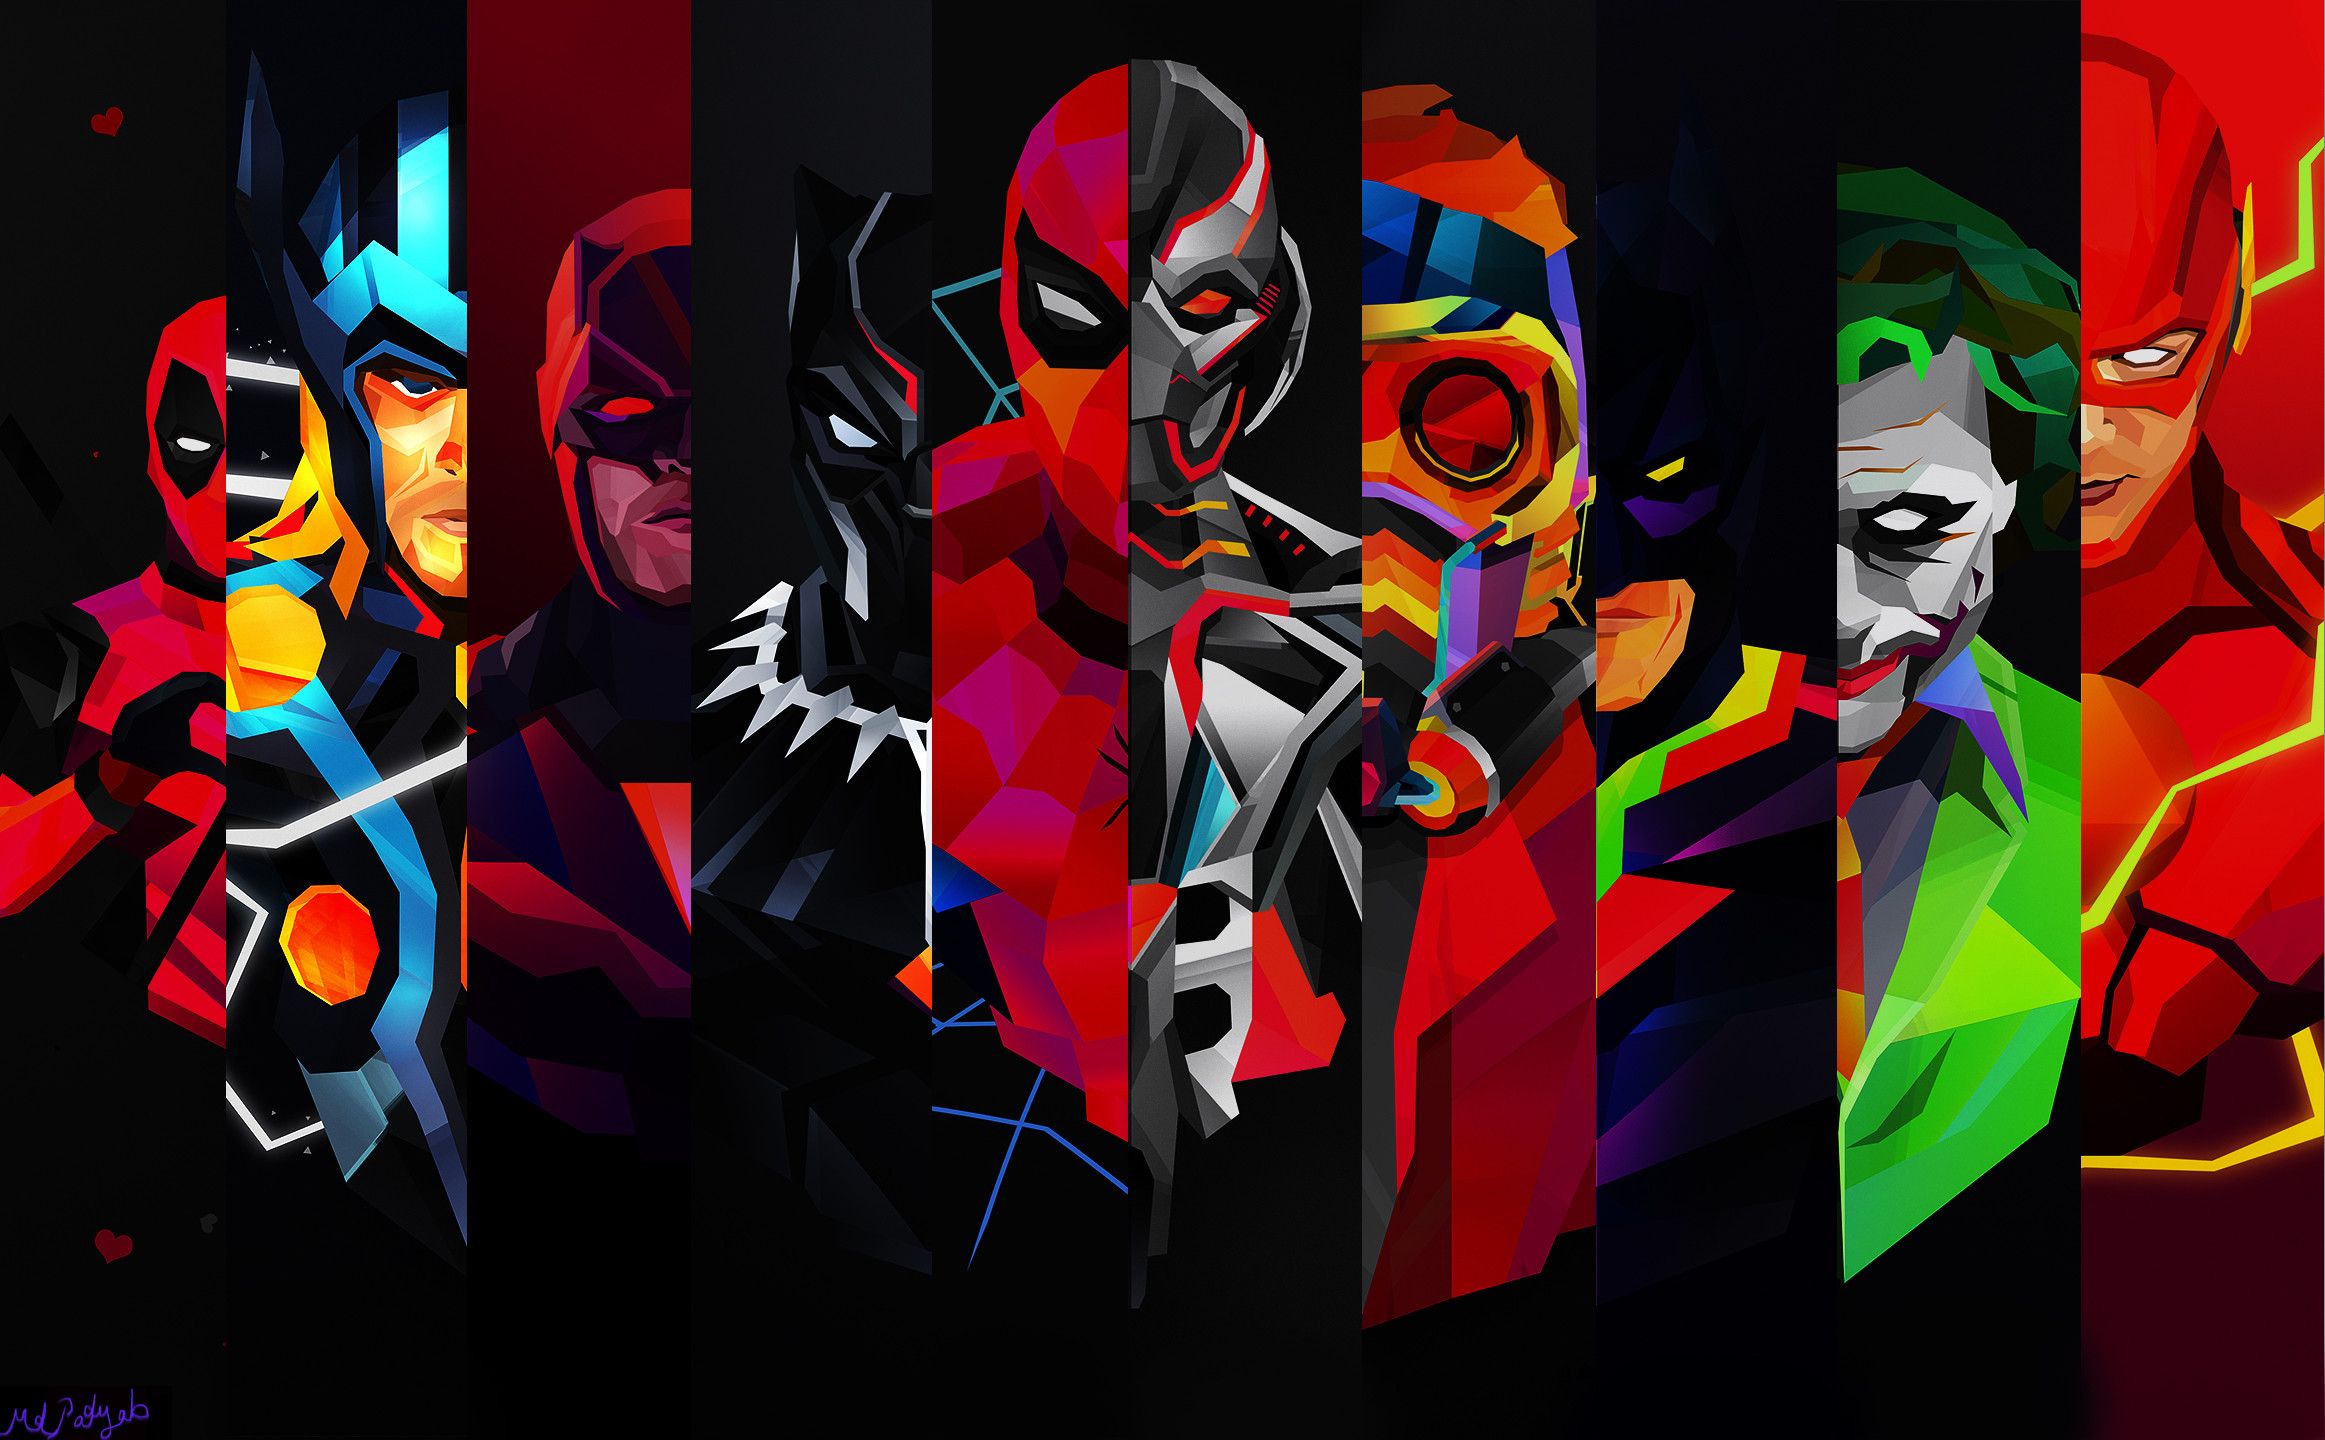 1920x1080 wallpaper art, deadpool, the flash, aquaman, batman, superman, green lantern, captain america, iron man, black panther, ultron, art, digital art, color, abstract, geometric, wallpaper, backgrounds - Marvel